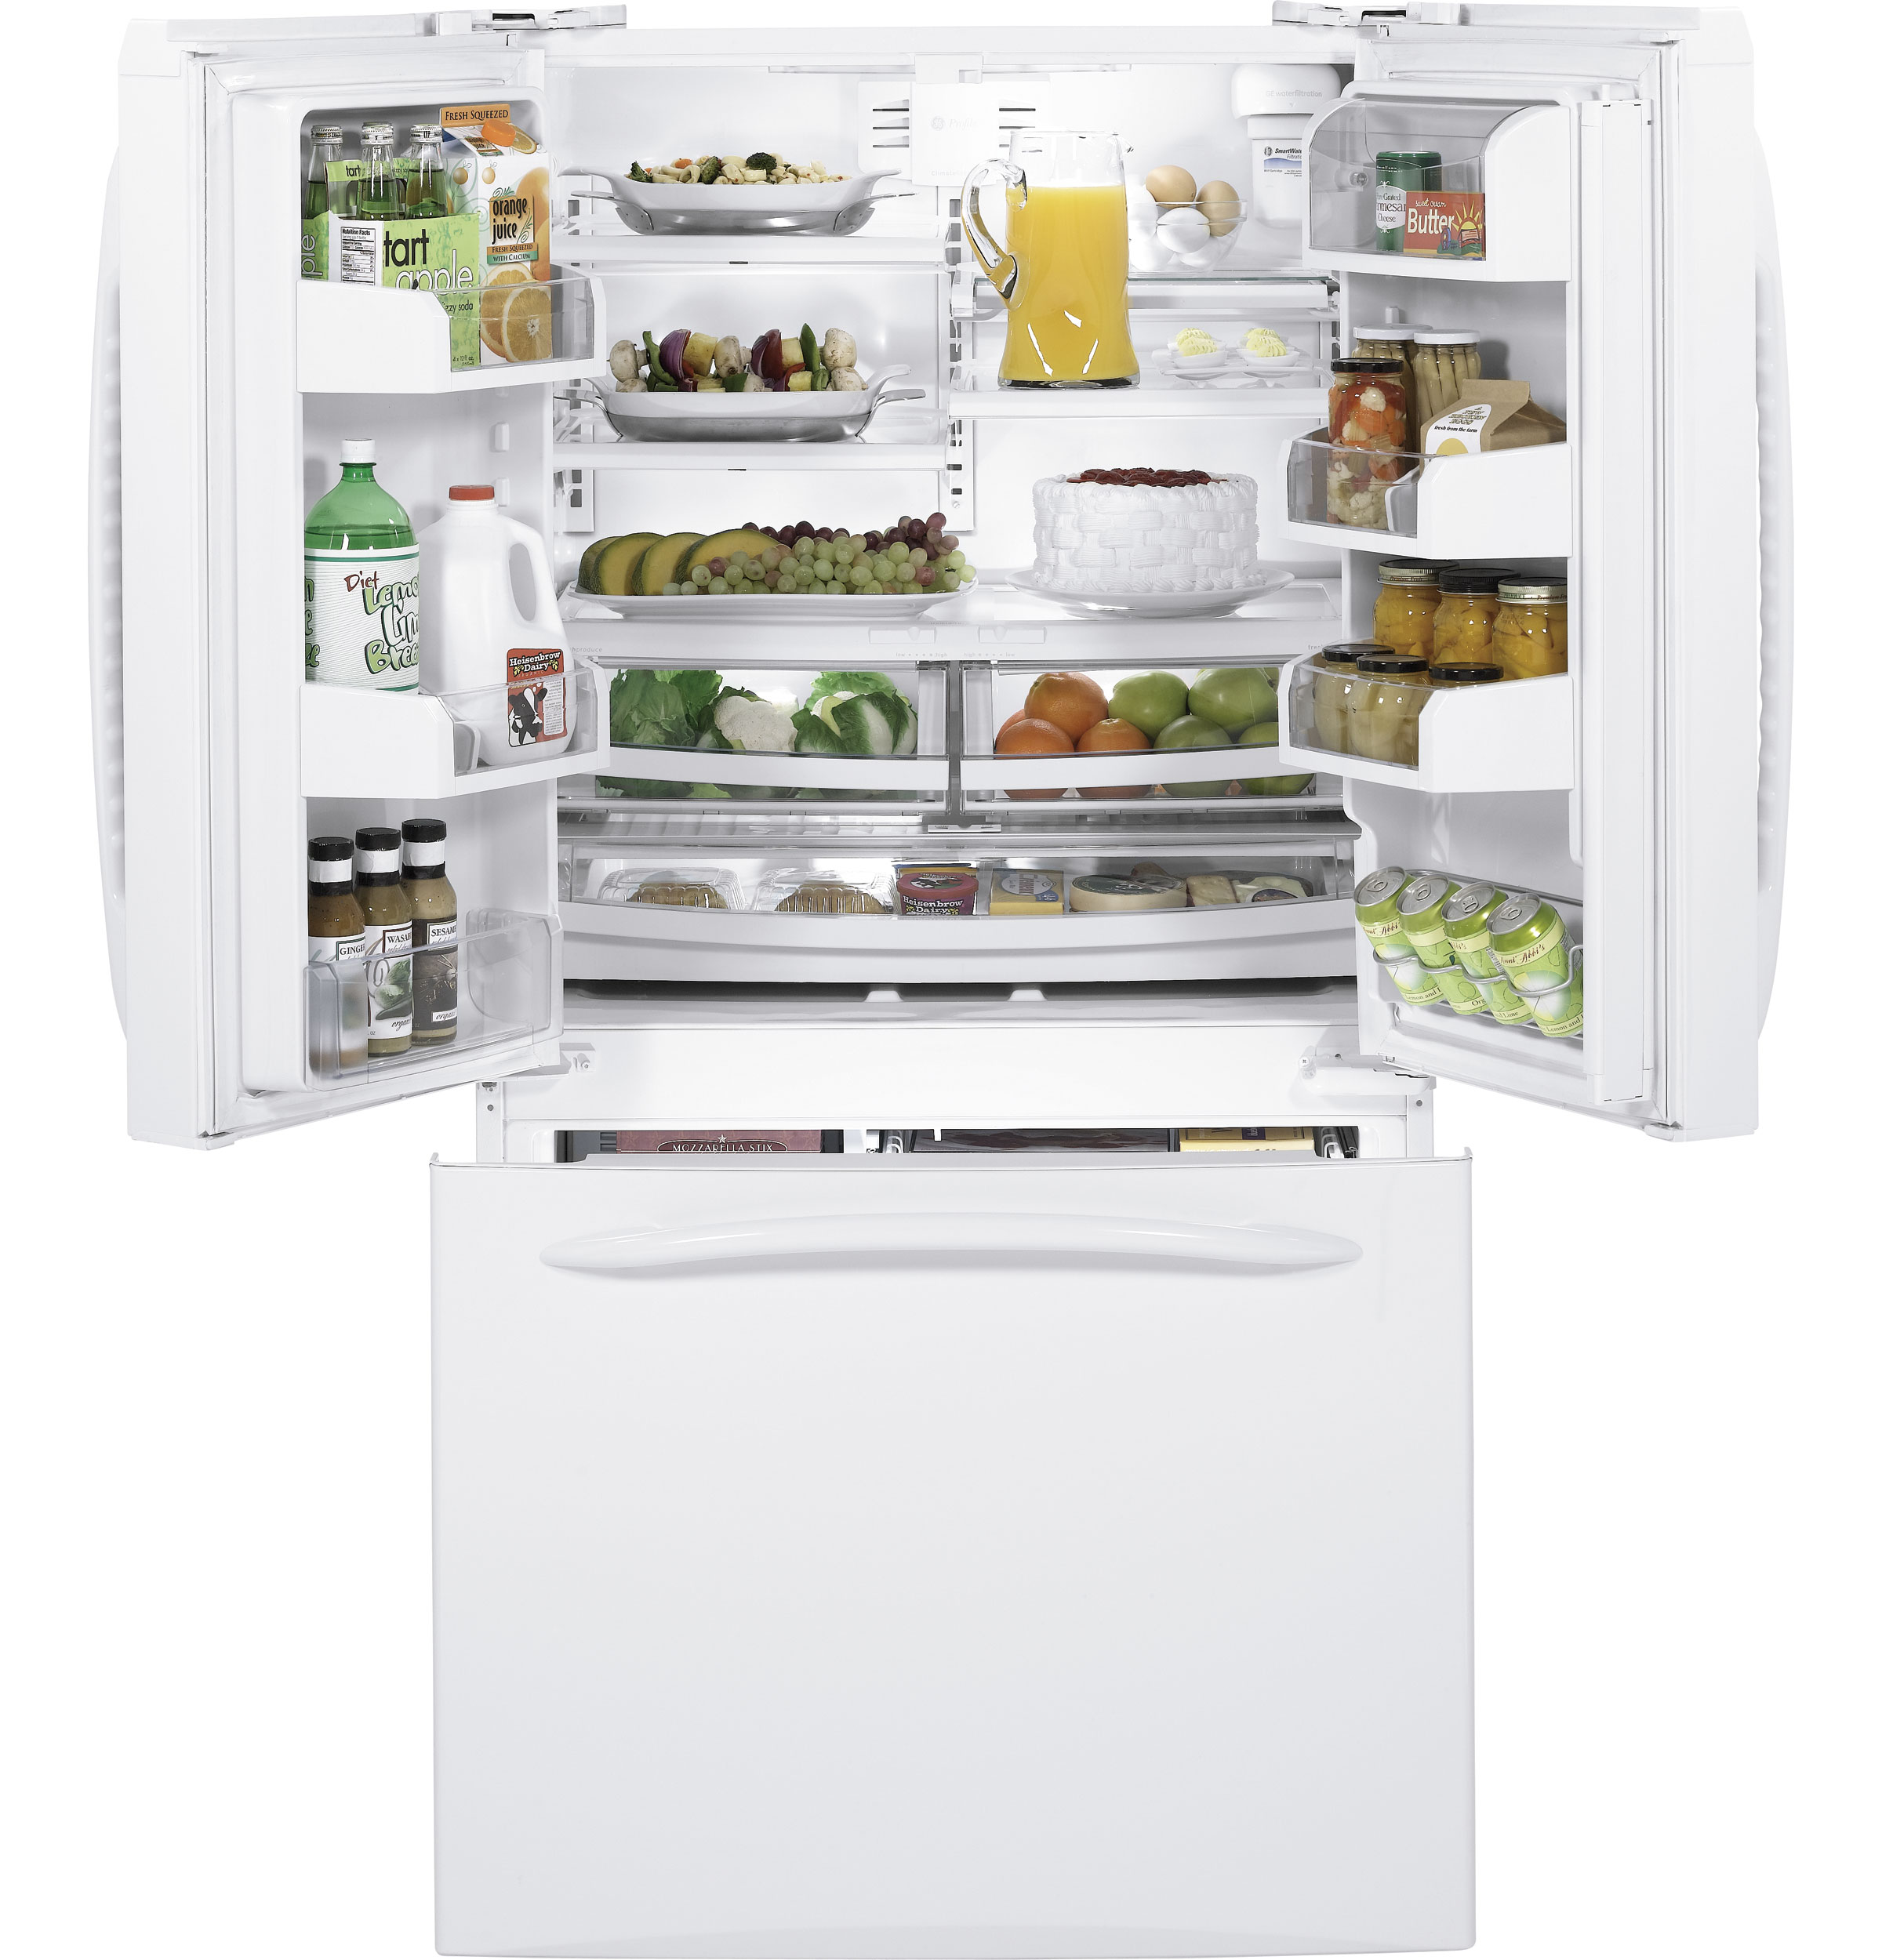 GE Profile™ ENERGY STAR® 25.1 Cu. Ft. French-Door Refrigerator